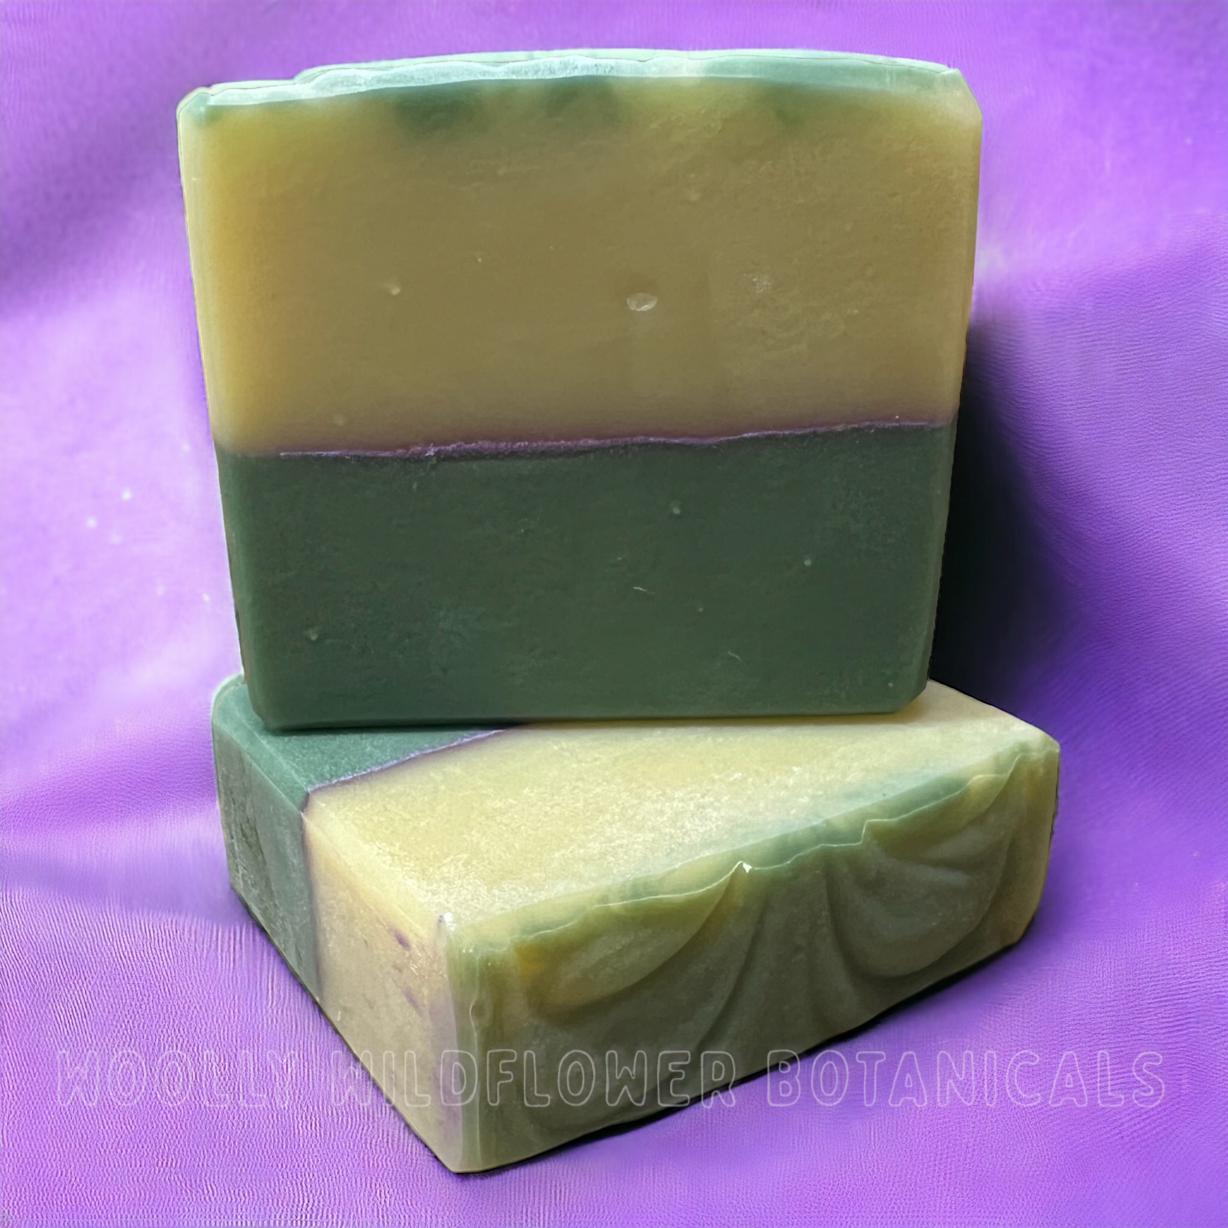 BLOOMING SAGE- organic bar soap